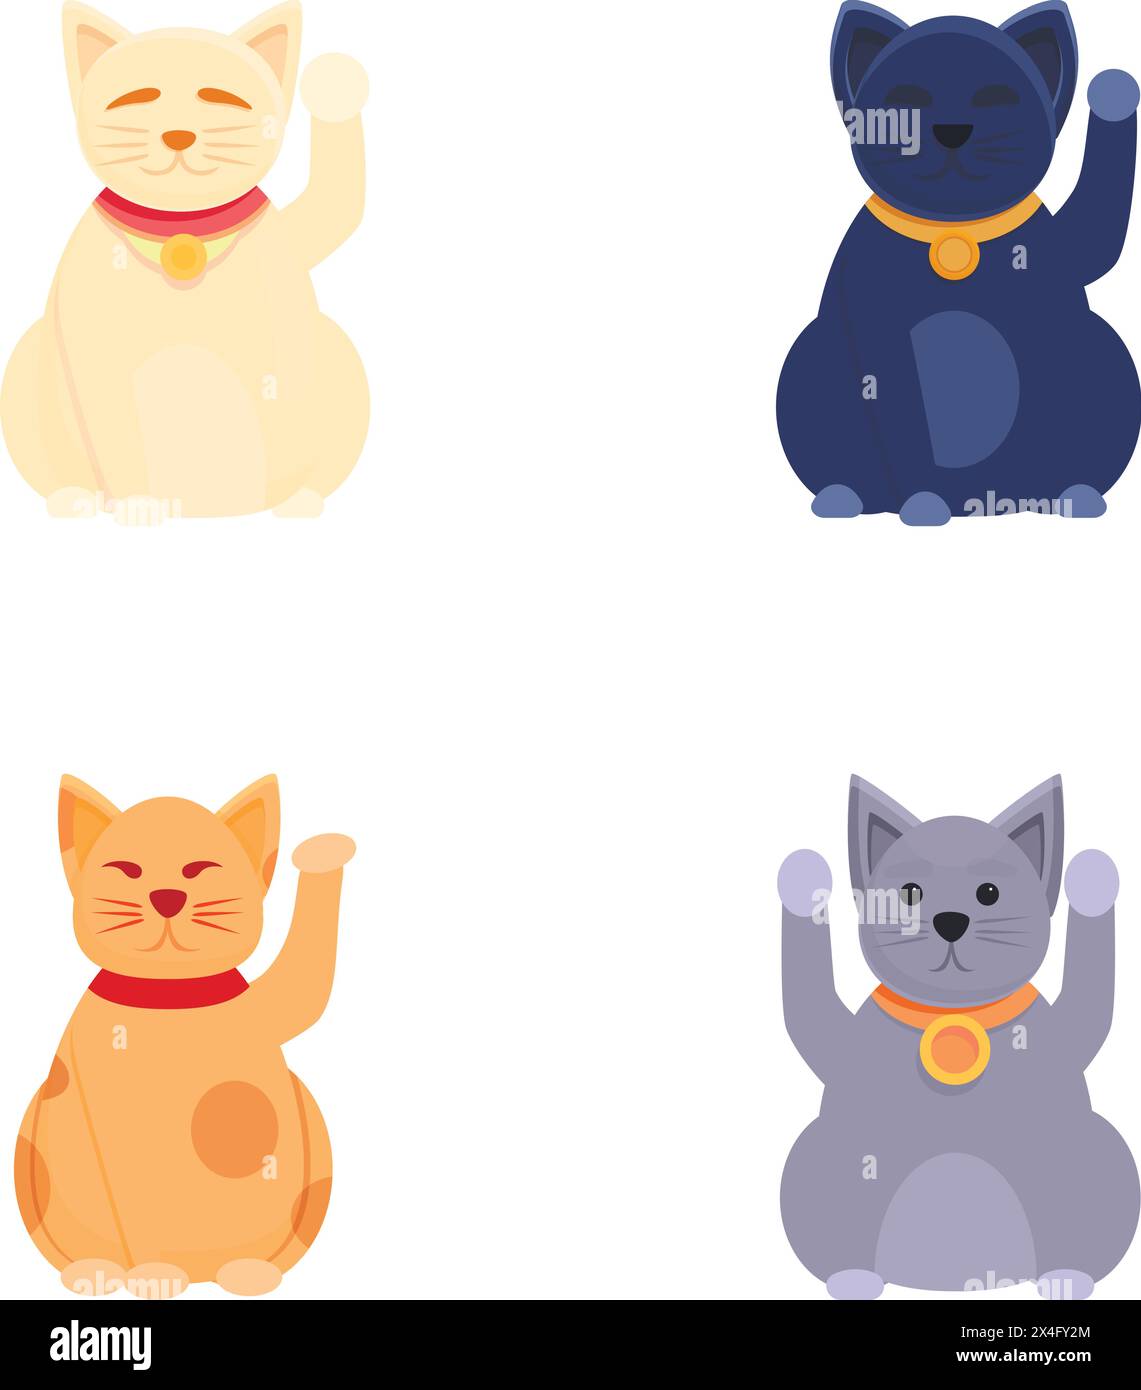 Maneki neko icons set cartoon vector. Japanese cat maneki neko with raised paw. Asian figurine for good luck Stock Vector